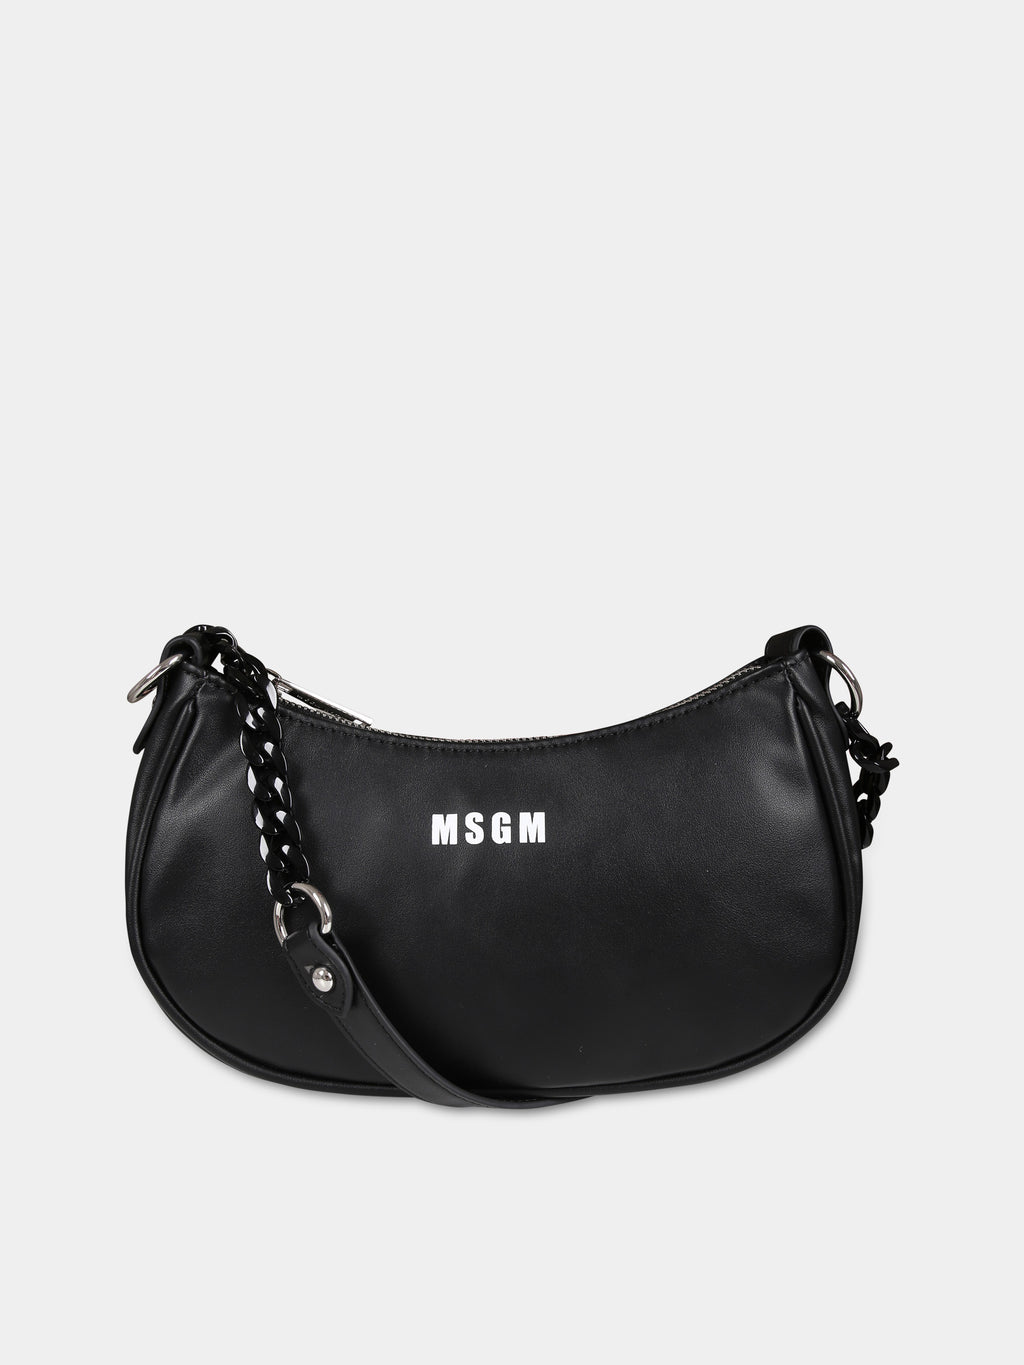 Black bag for girl with logo